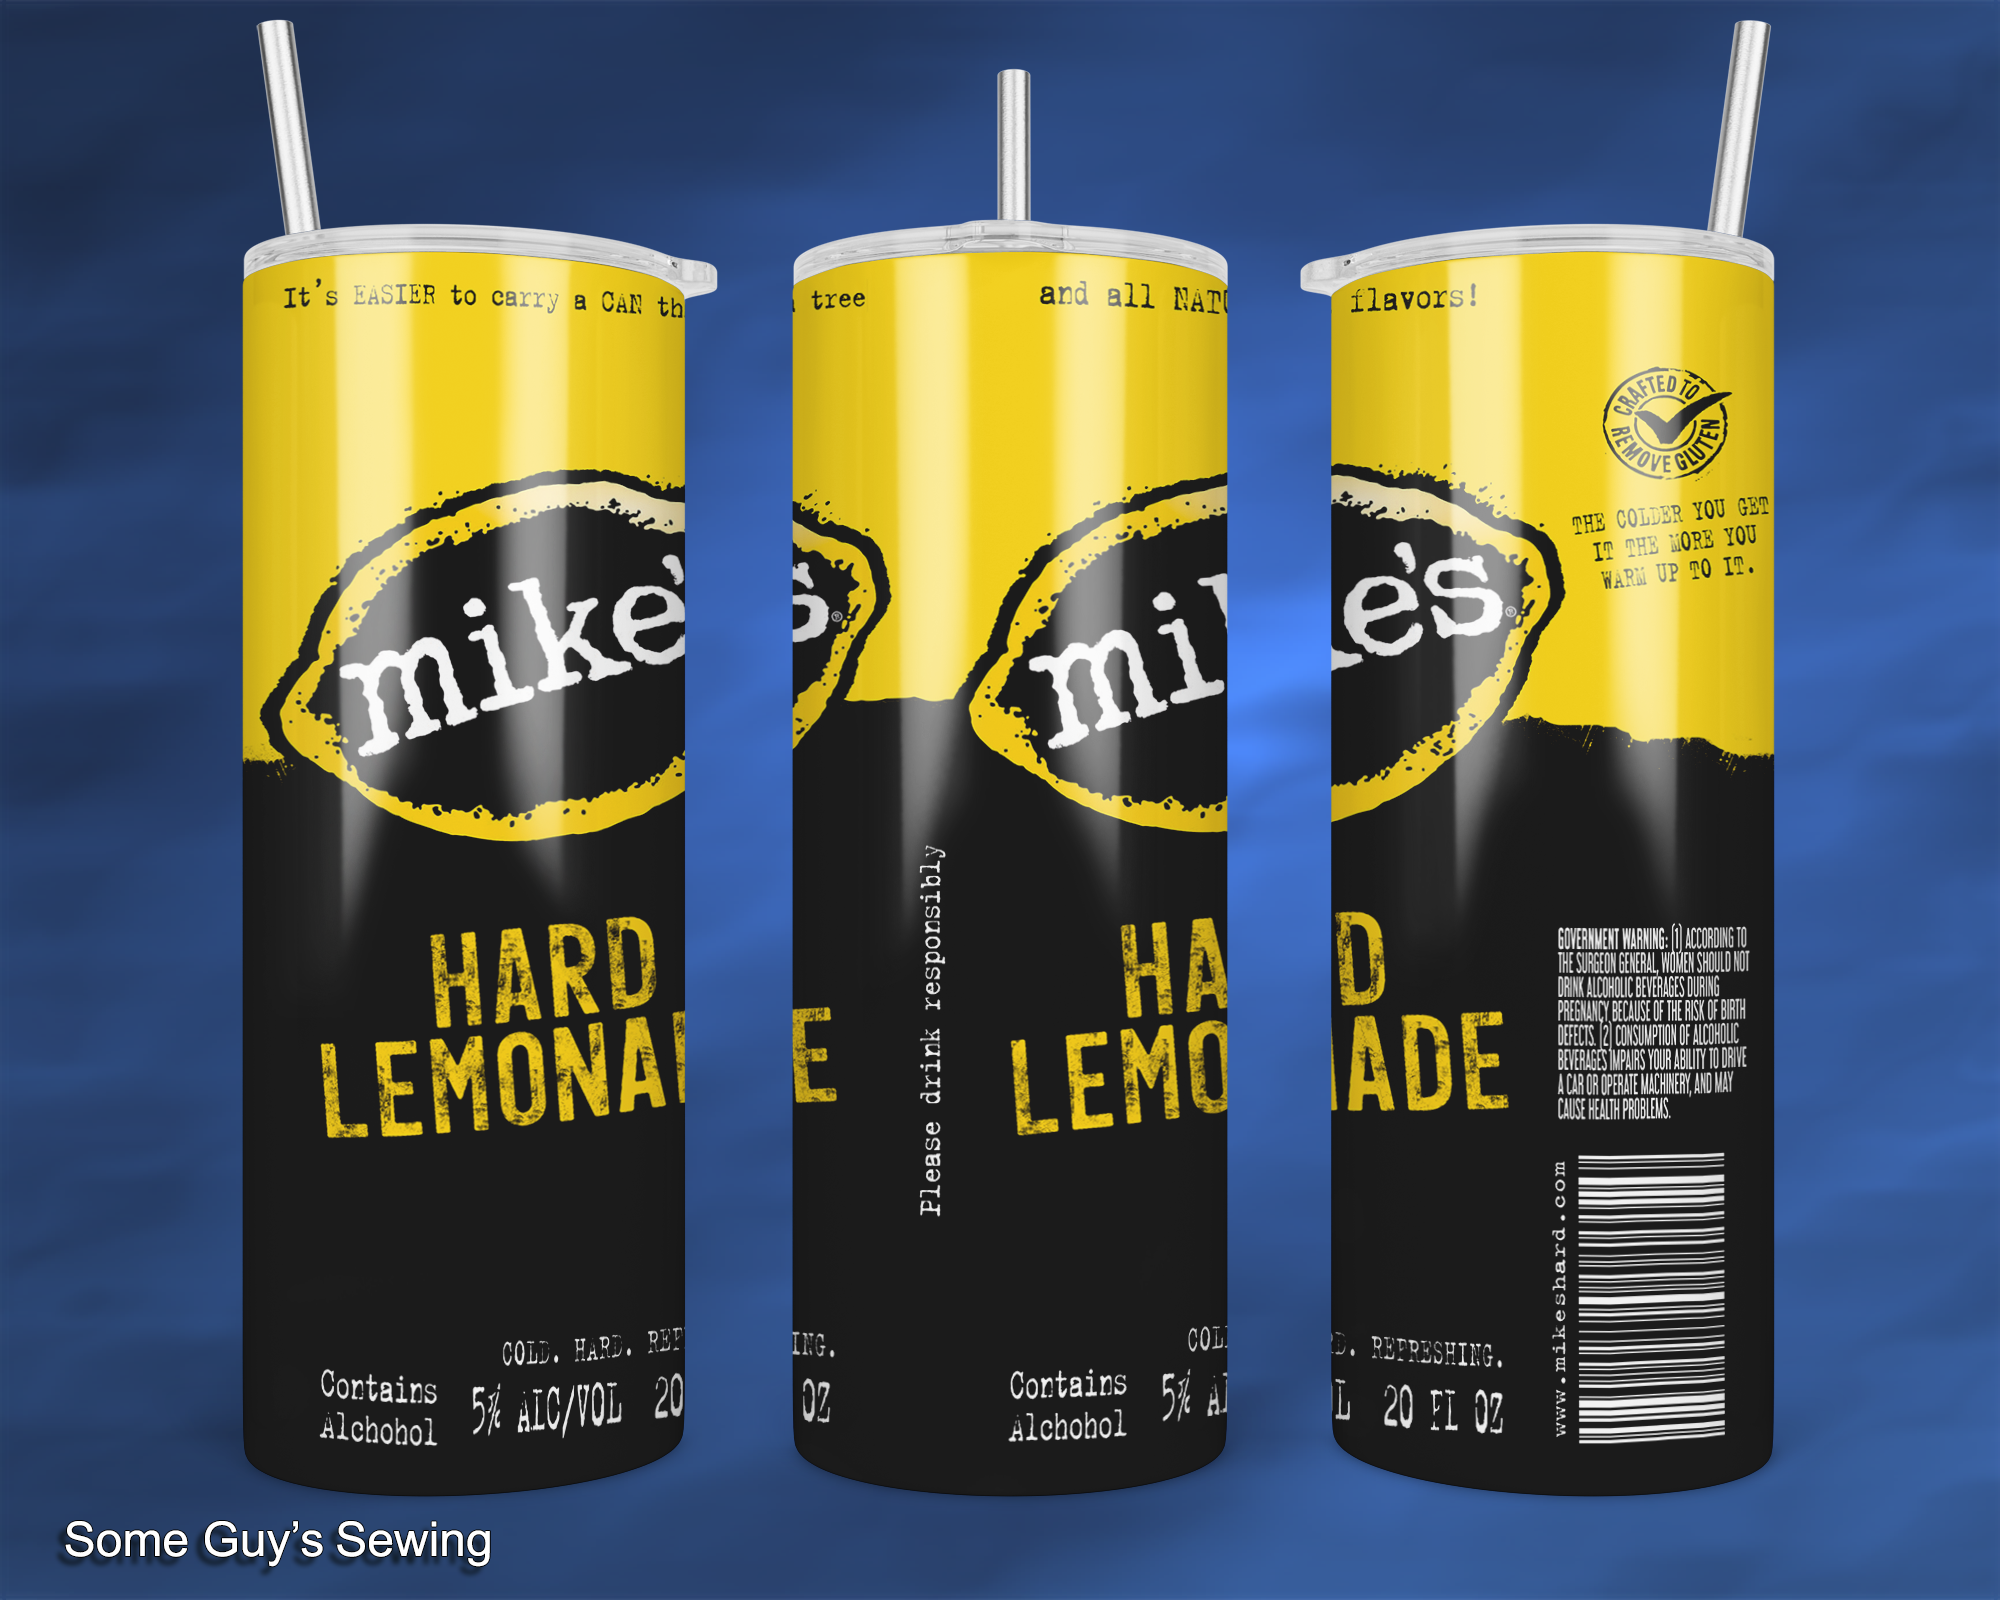 Mike_s Hard Lemonade